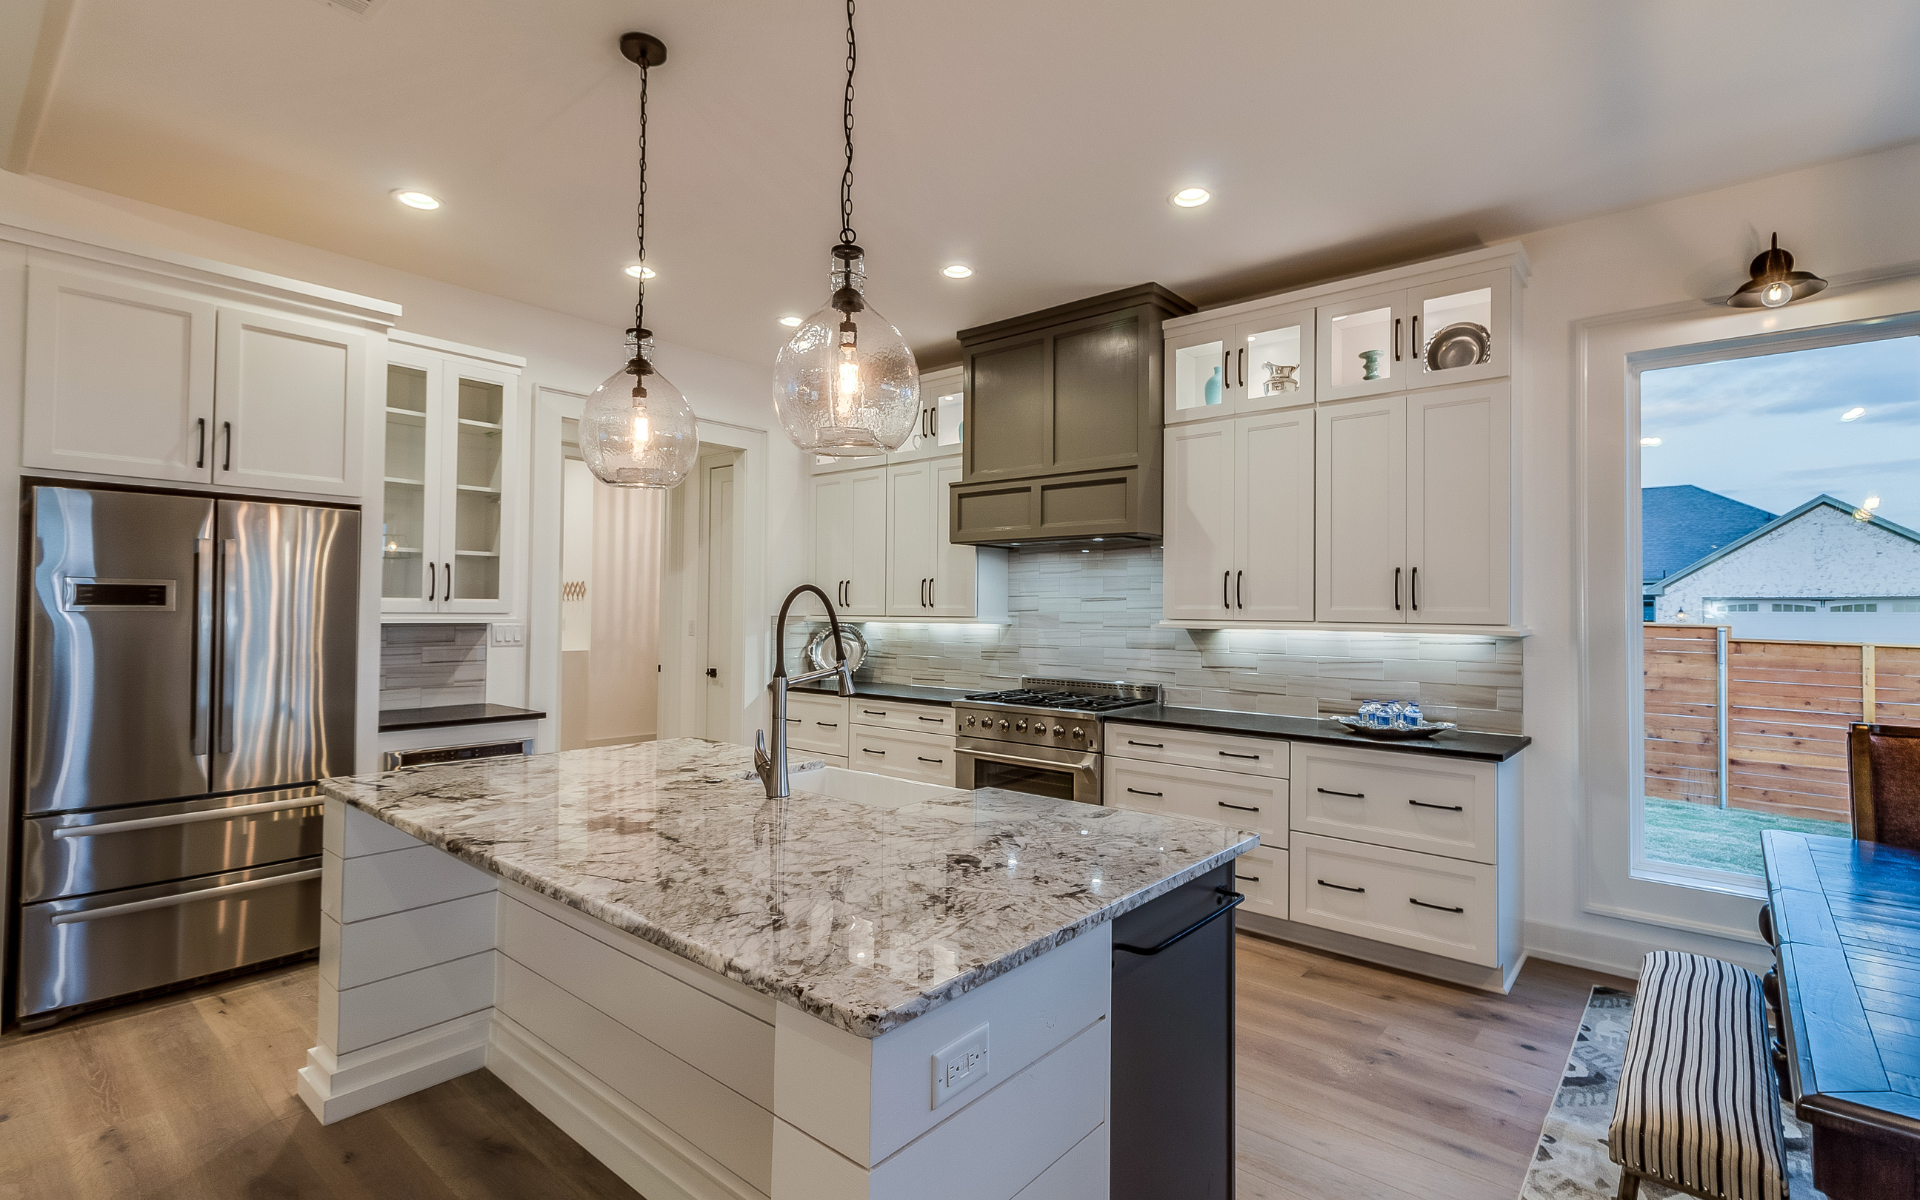 Elegant kitchen with white cabinets, kitchen island, and granite countertops